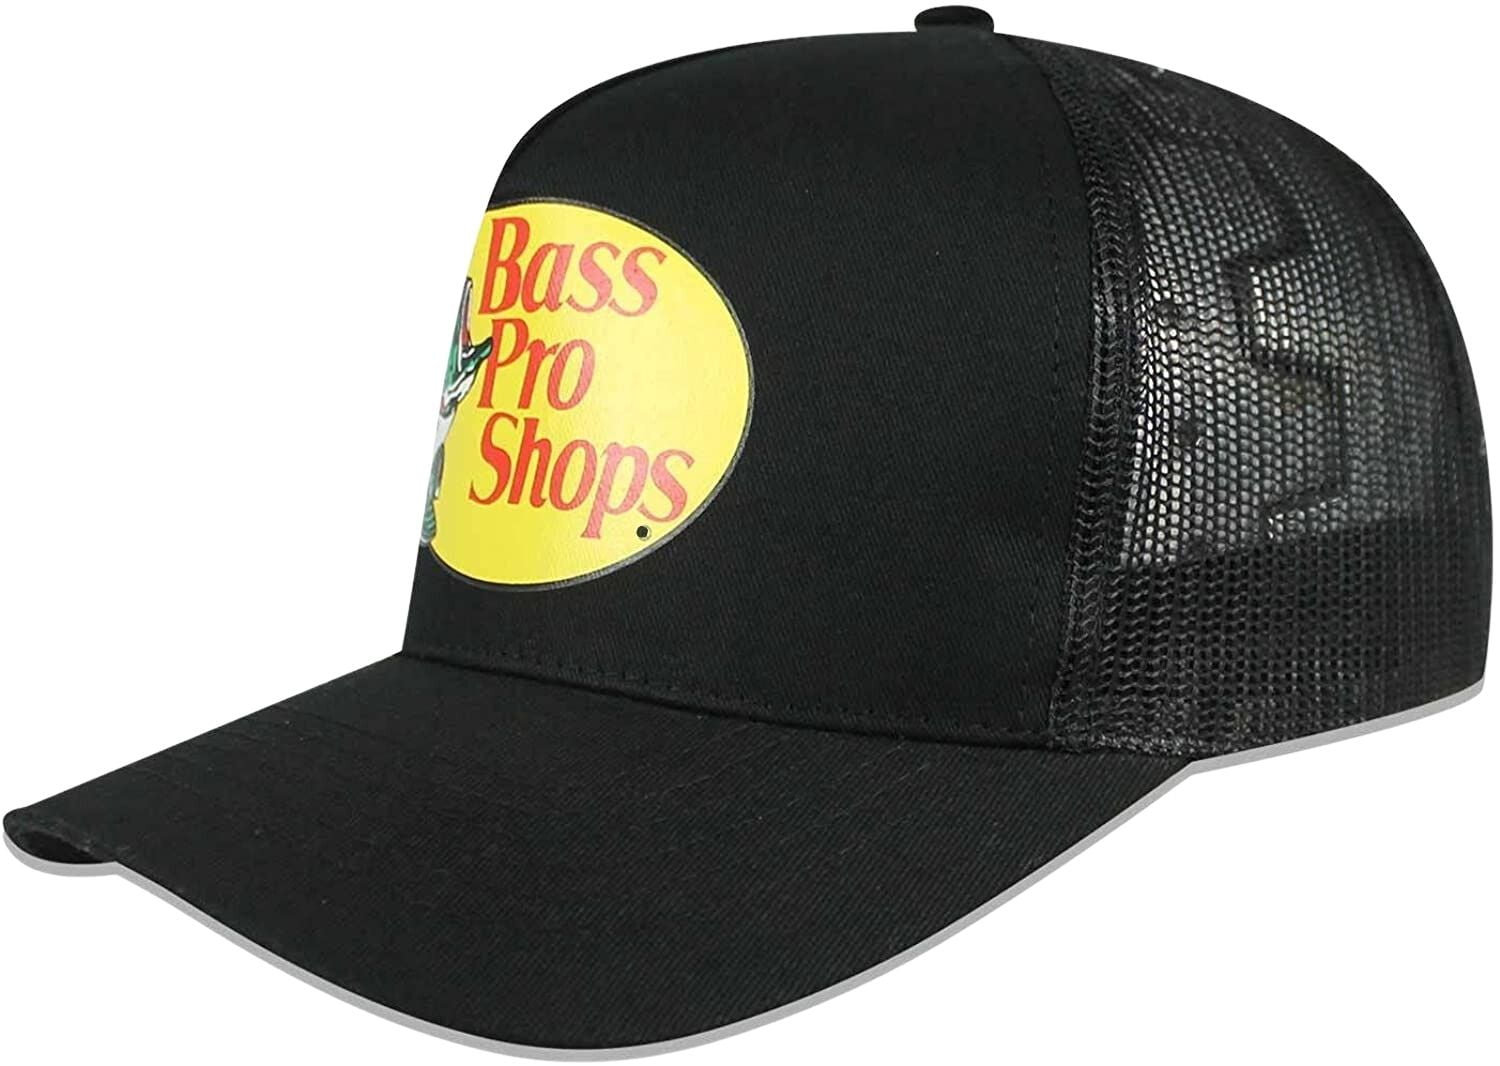 Bass Pro Shops Hat Cap Snapback Trucker Black Yellow Adult Fisherman Fishing  Men